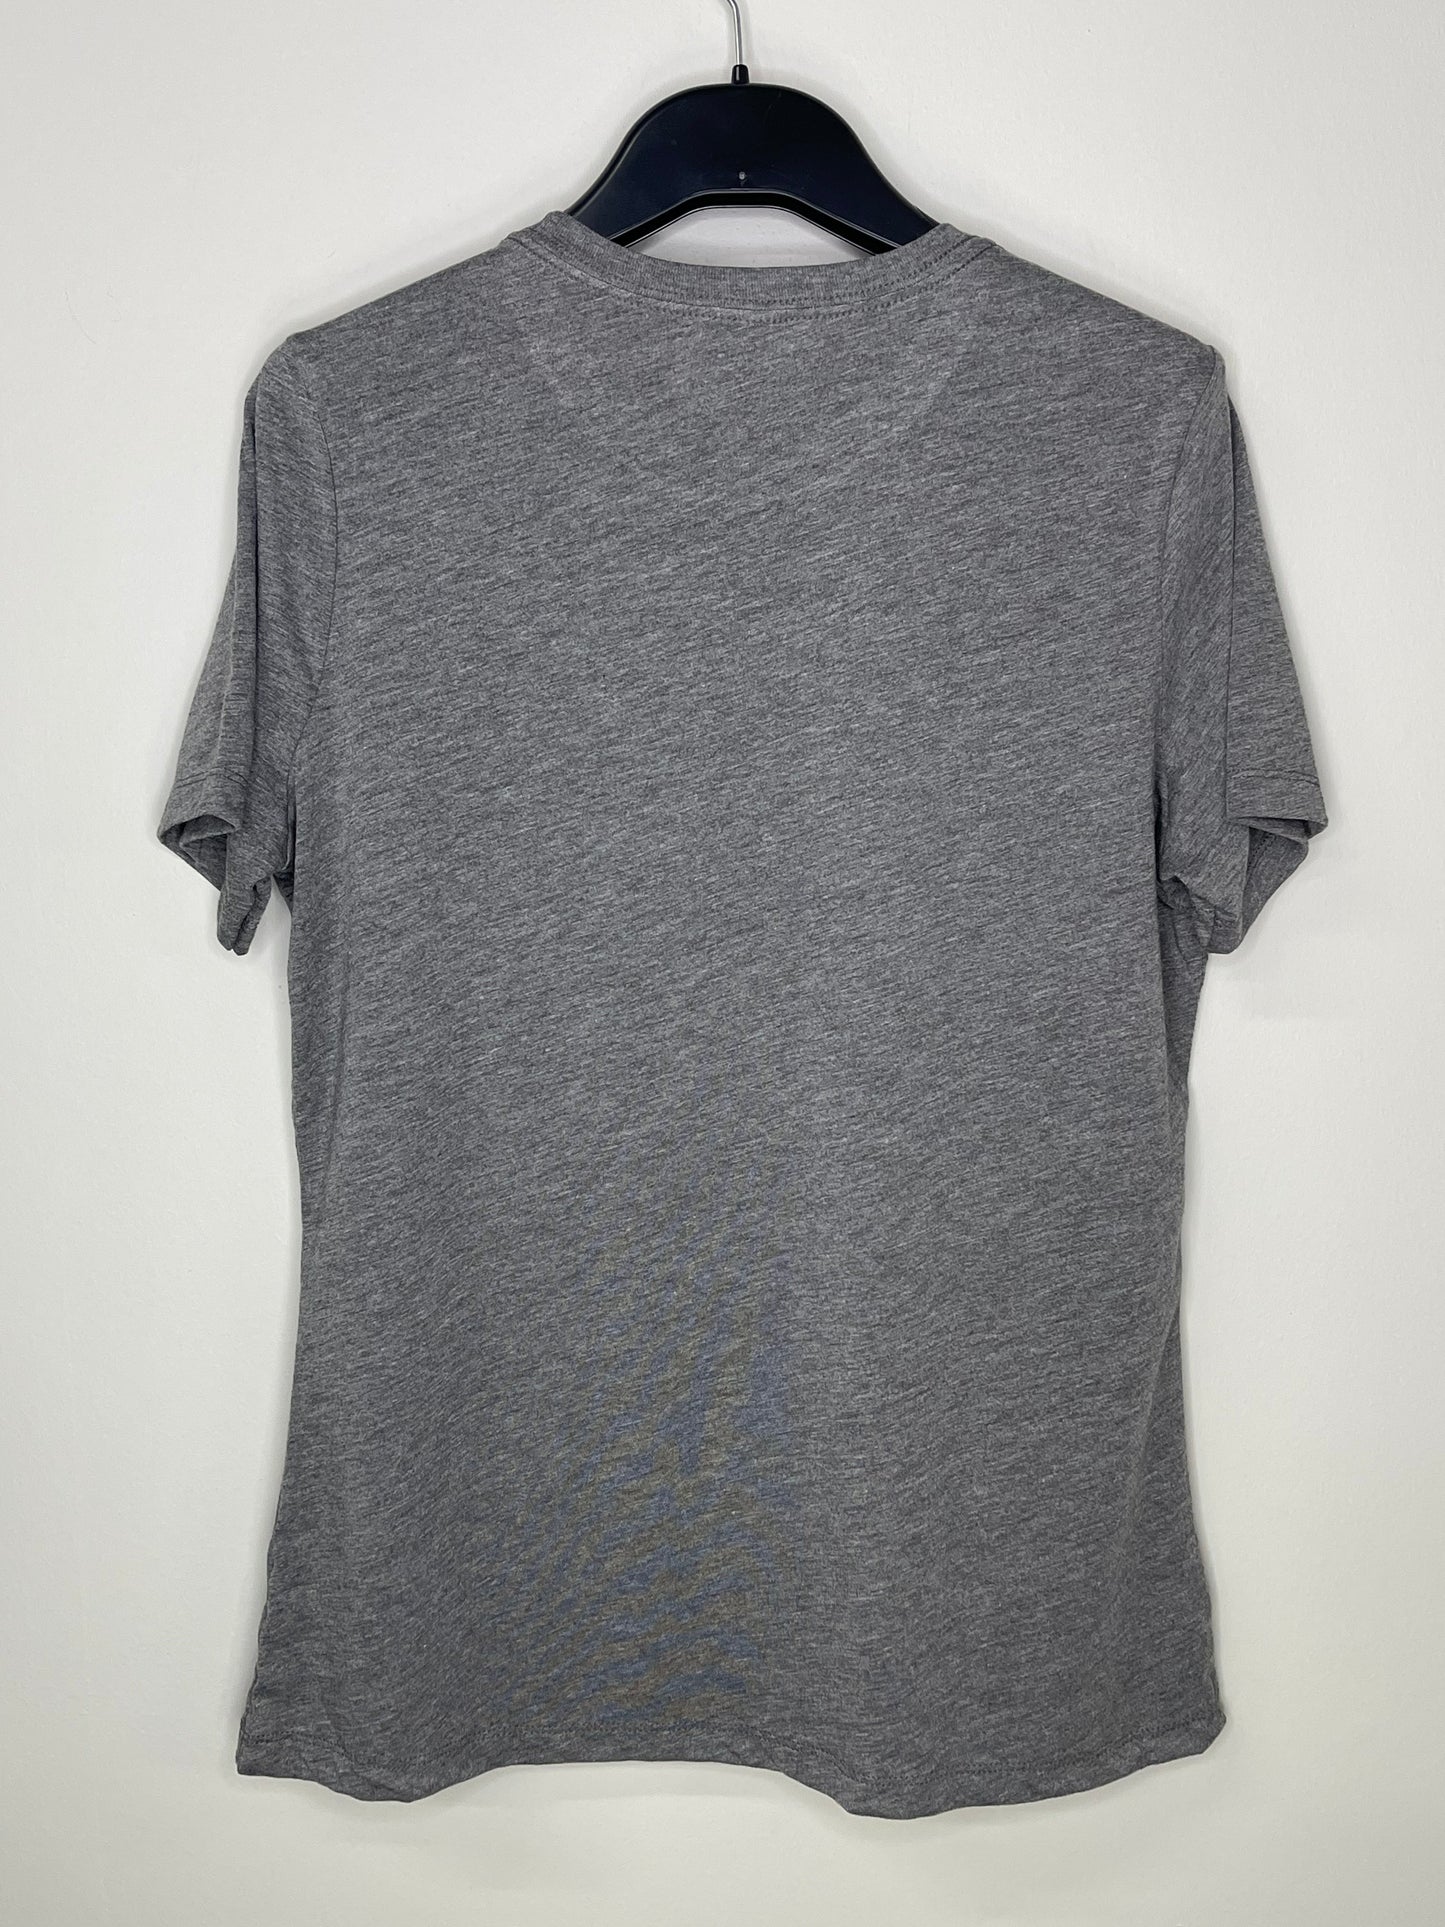 Game Day T-Shirt, Short Sleeve Gray, TN Football